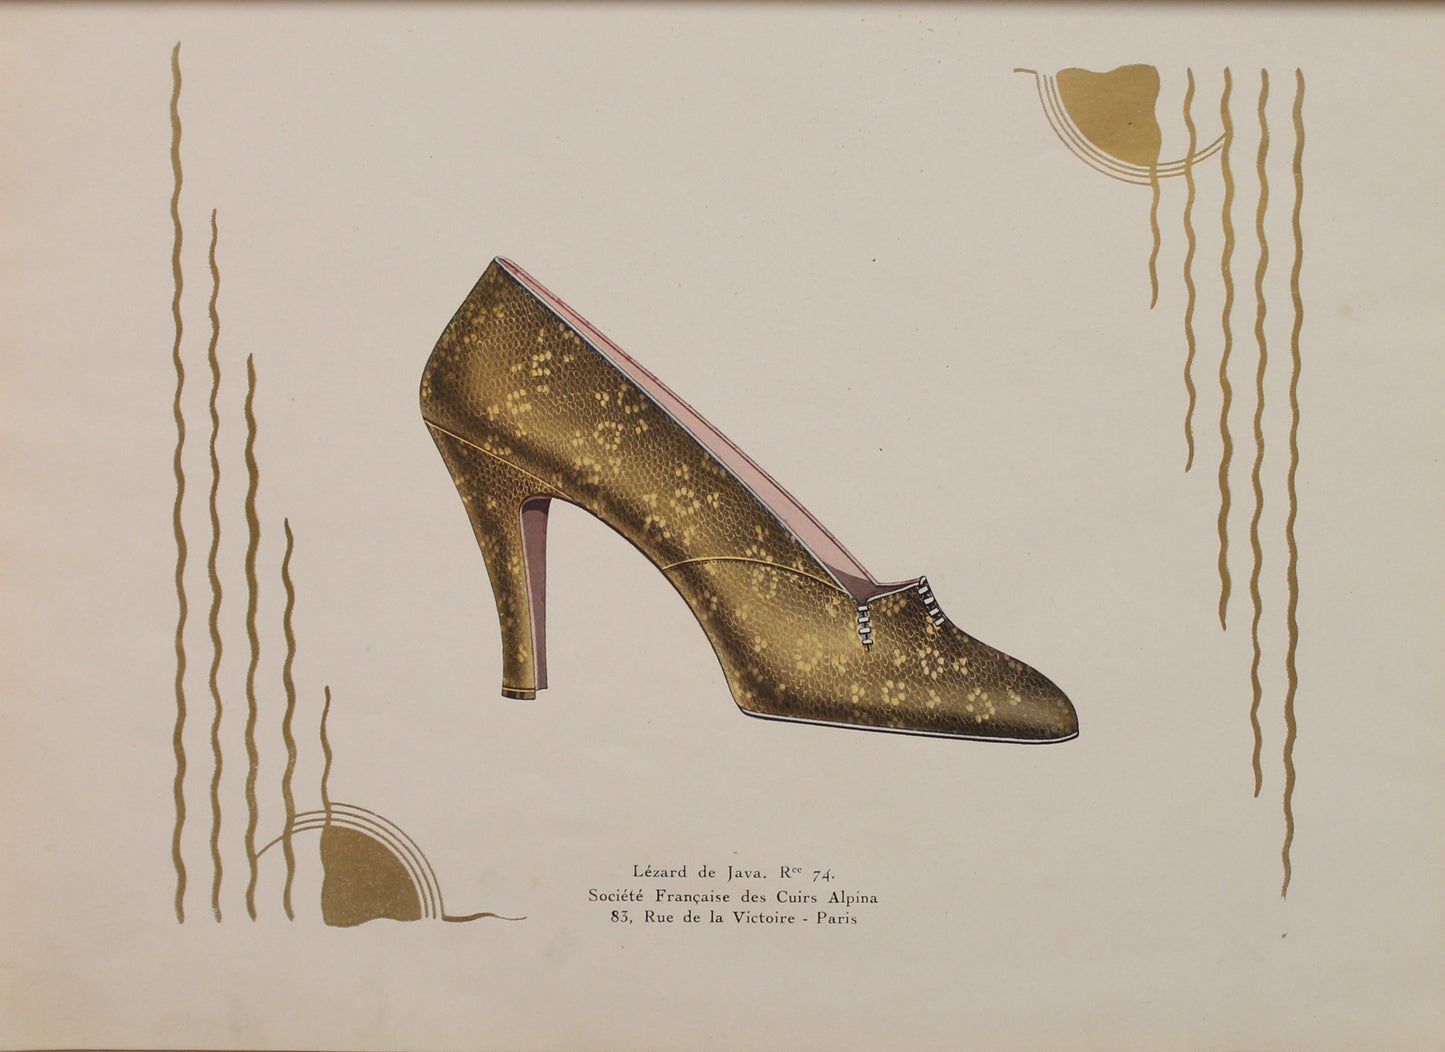 Fashion, French Society Shoes, Alpina Leather, Java Lizard, #74, c1920